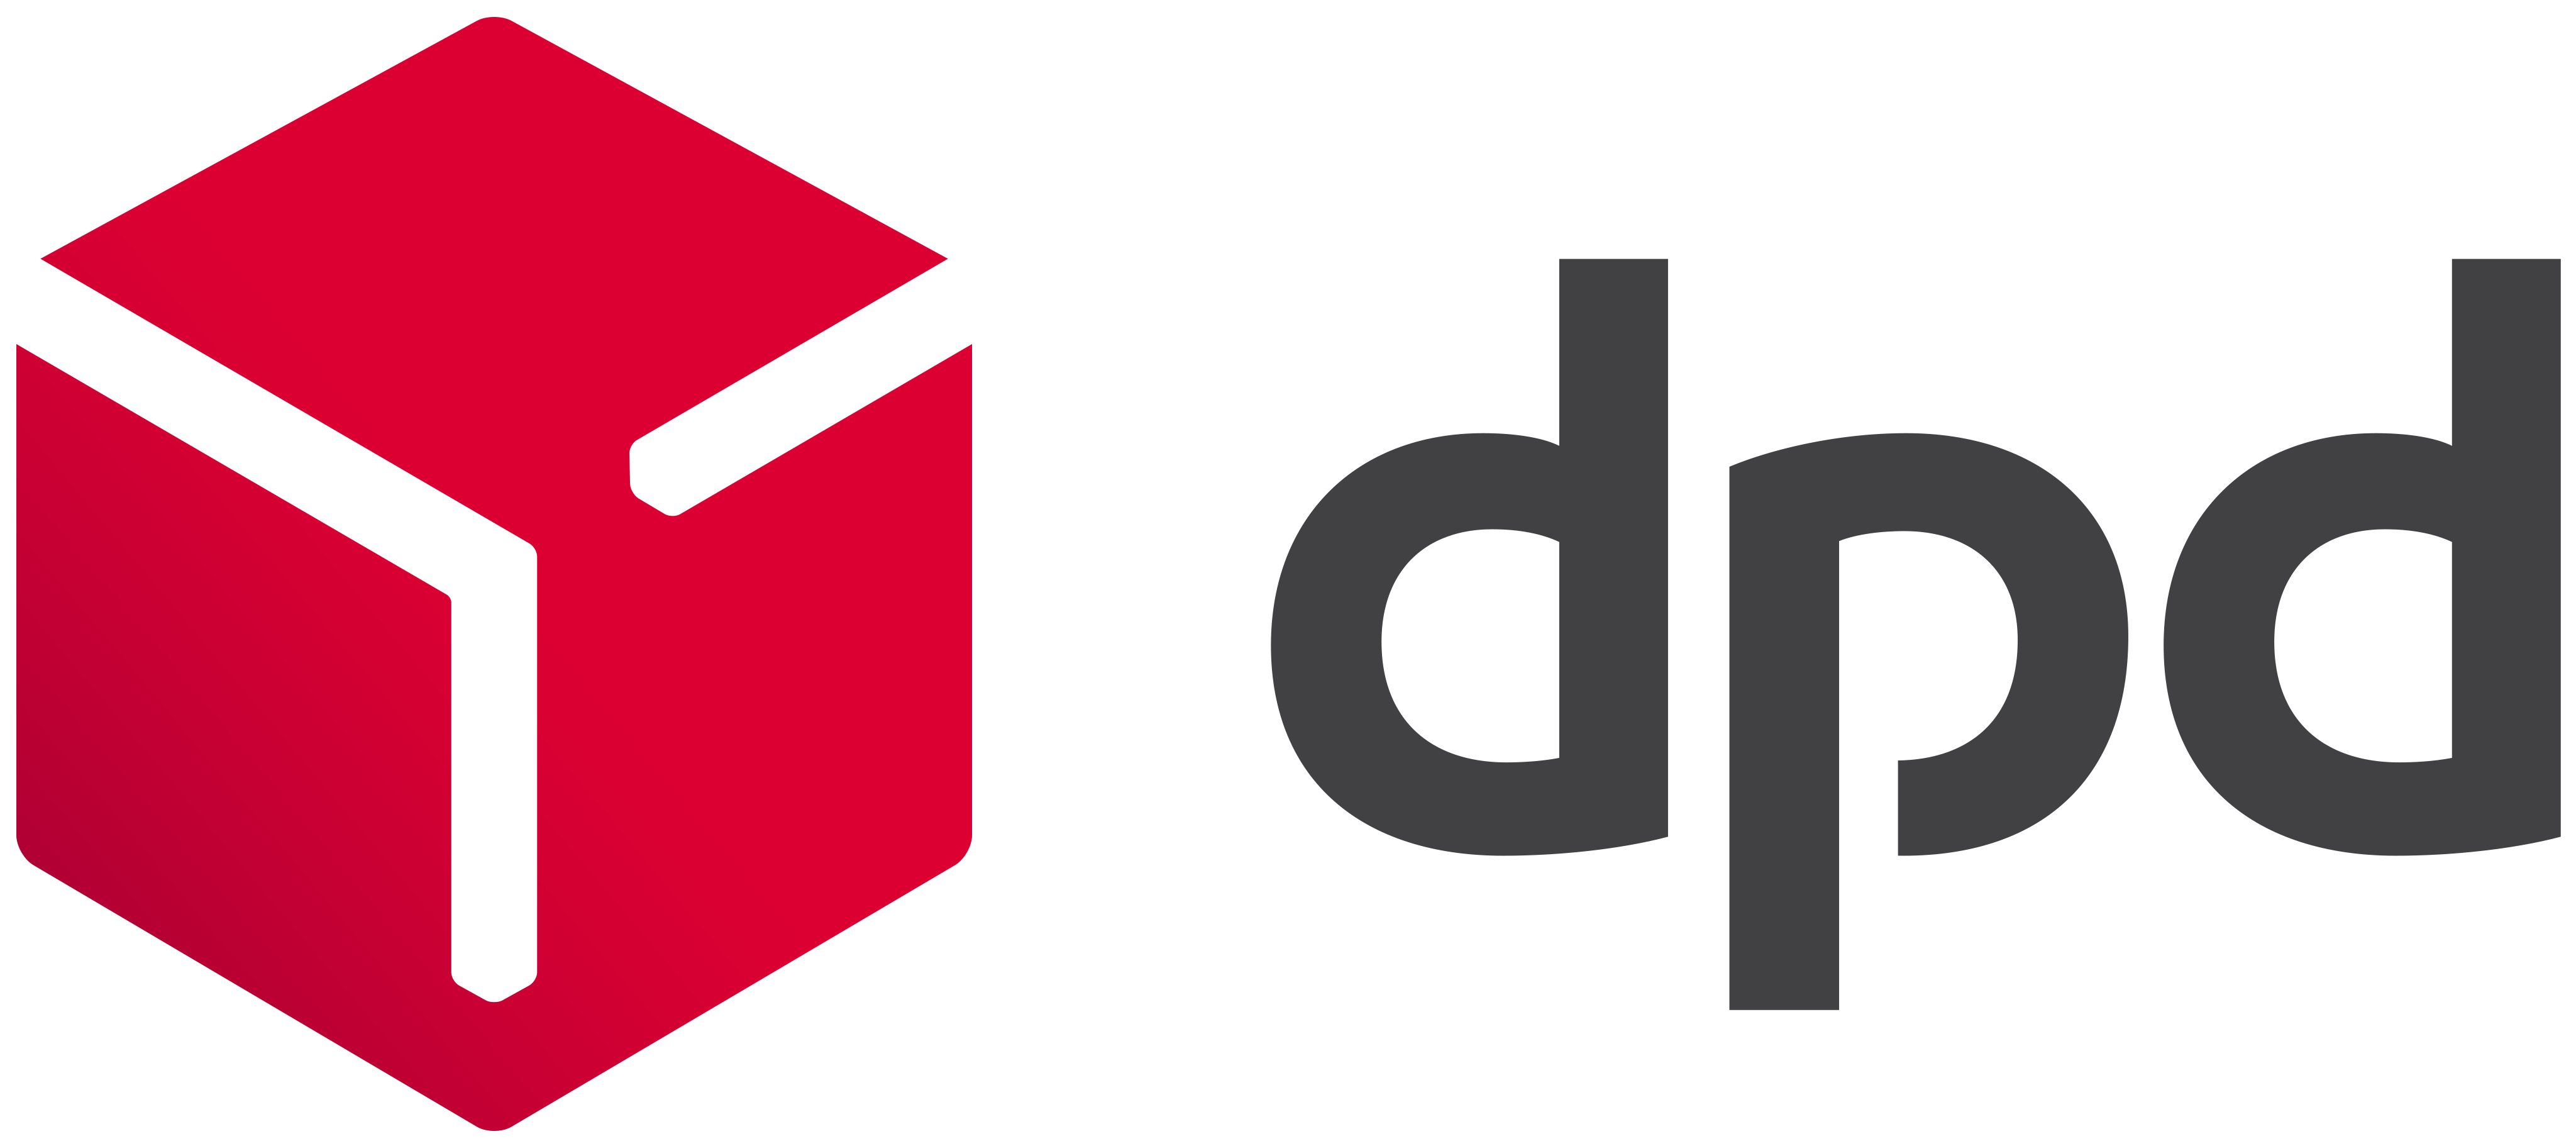 Delivery company logo DPD